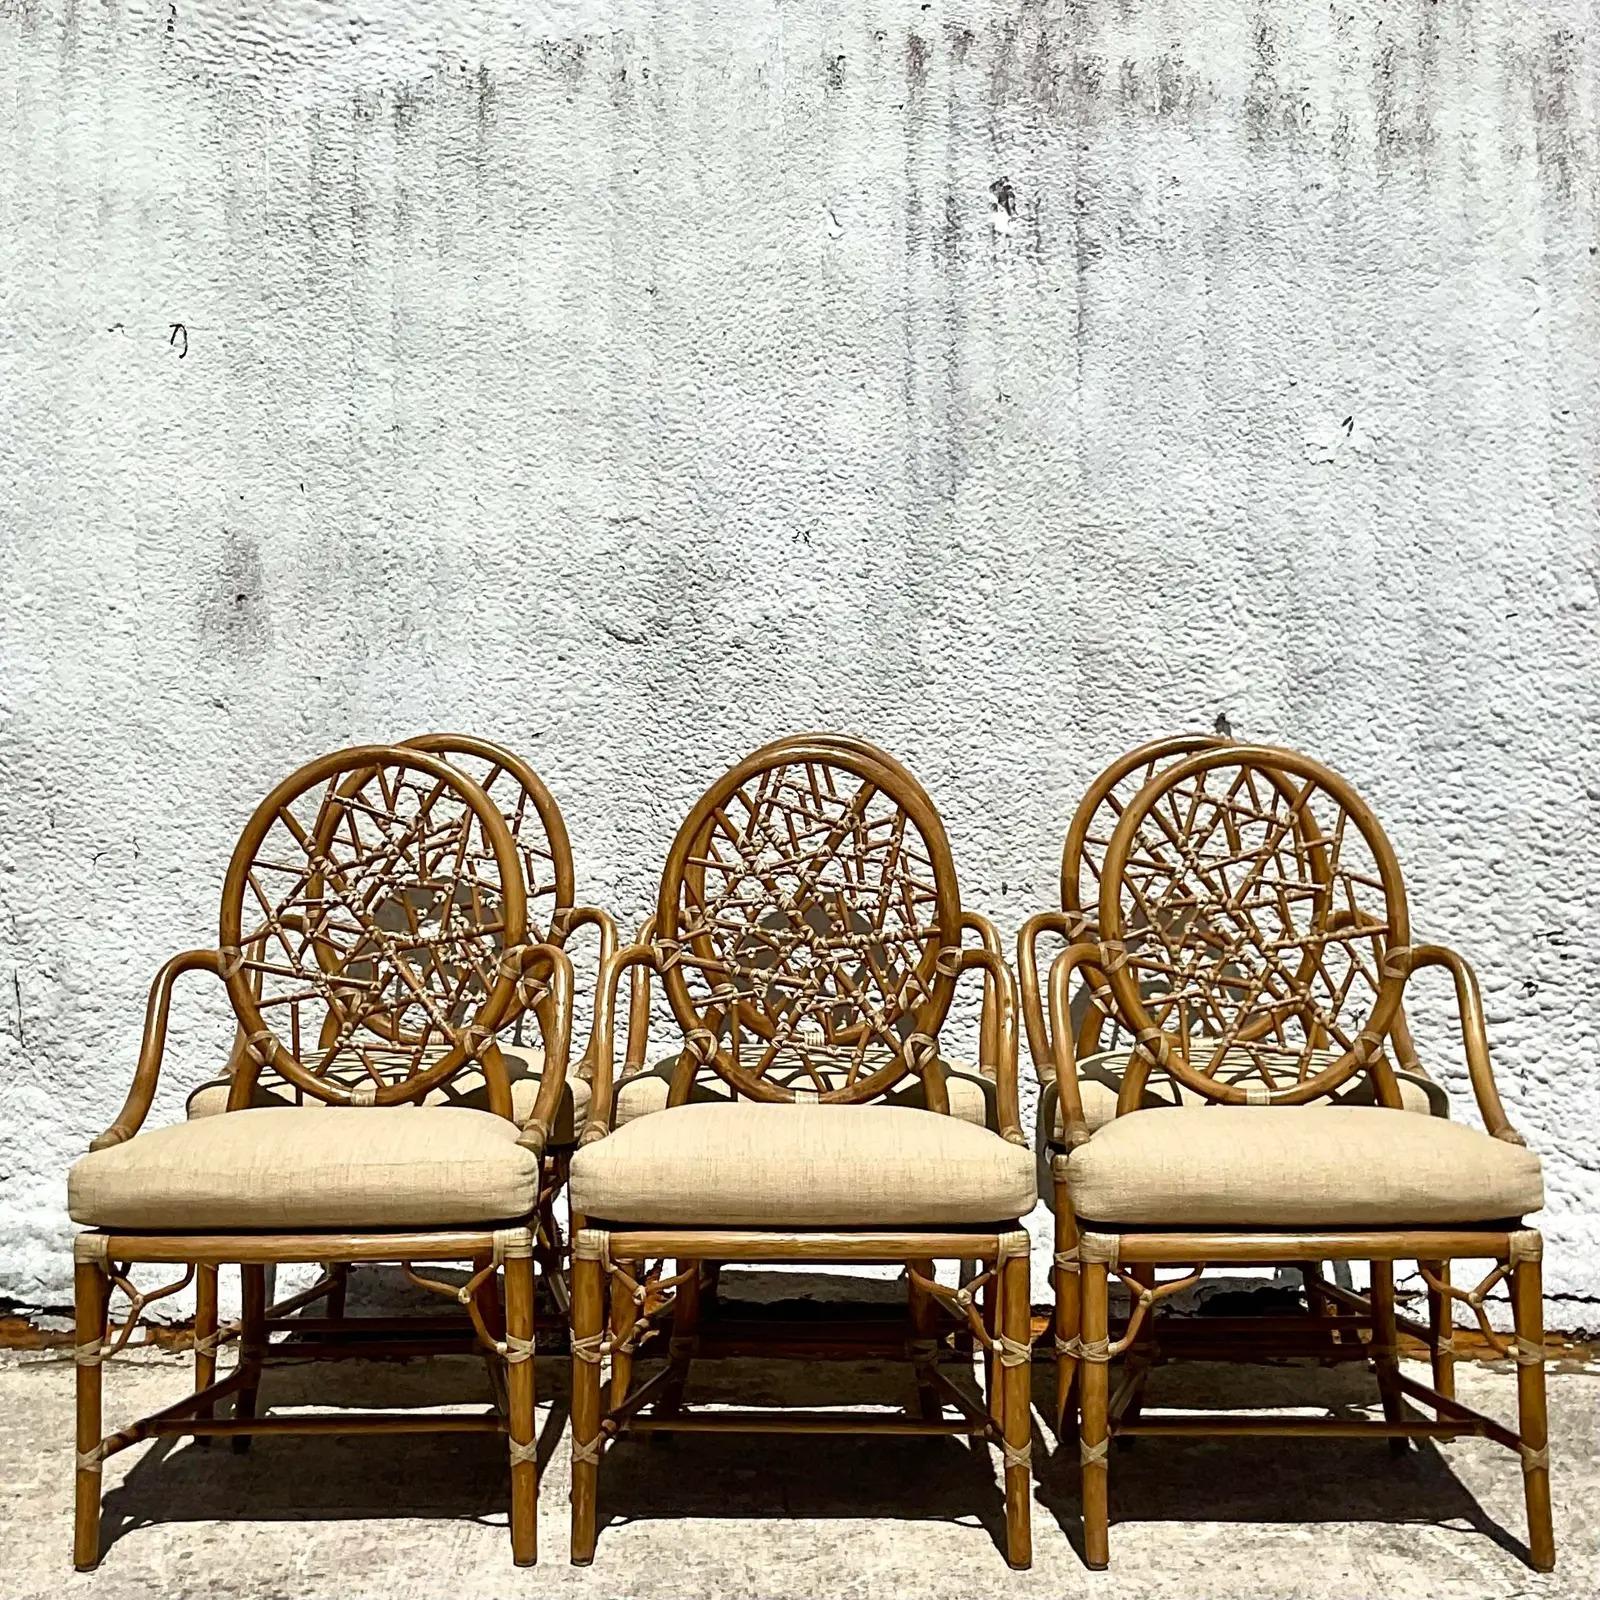 Vintage Coastal McGuire “Cracked Ice” Rattan Dining Chairs - Set of 6 5